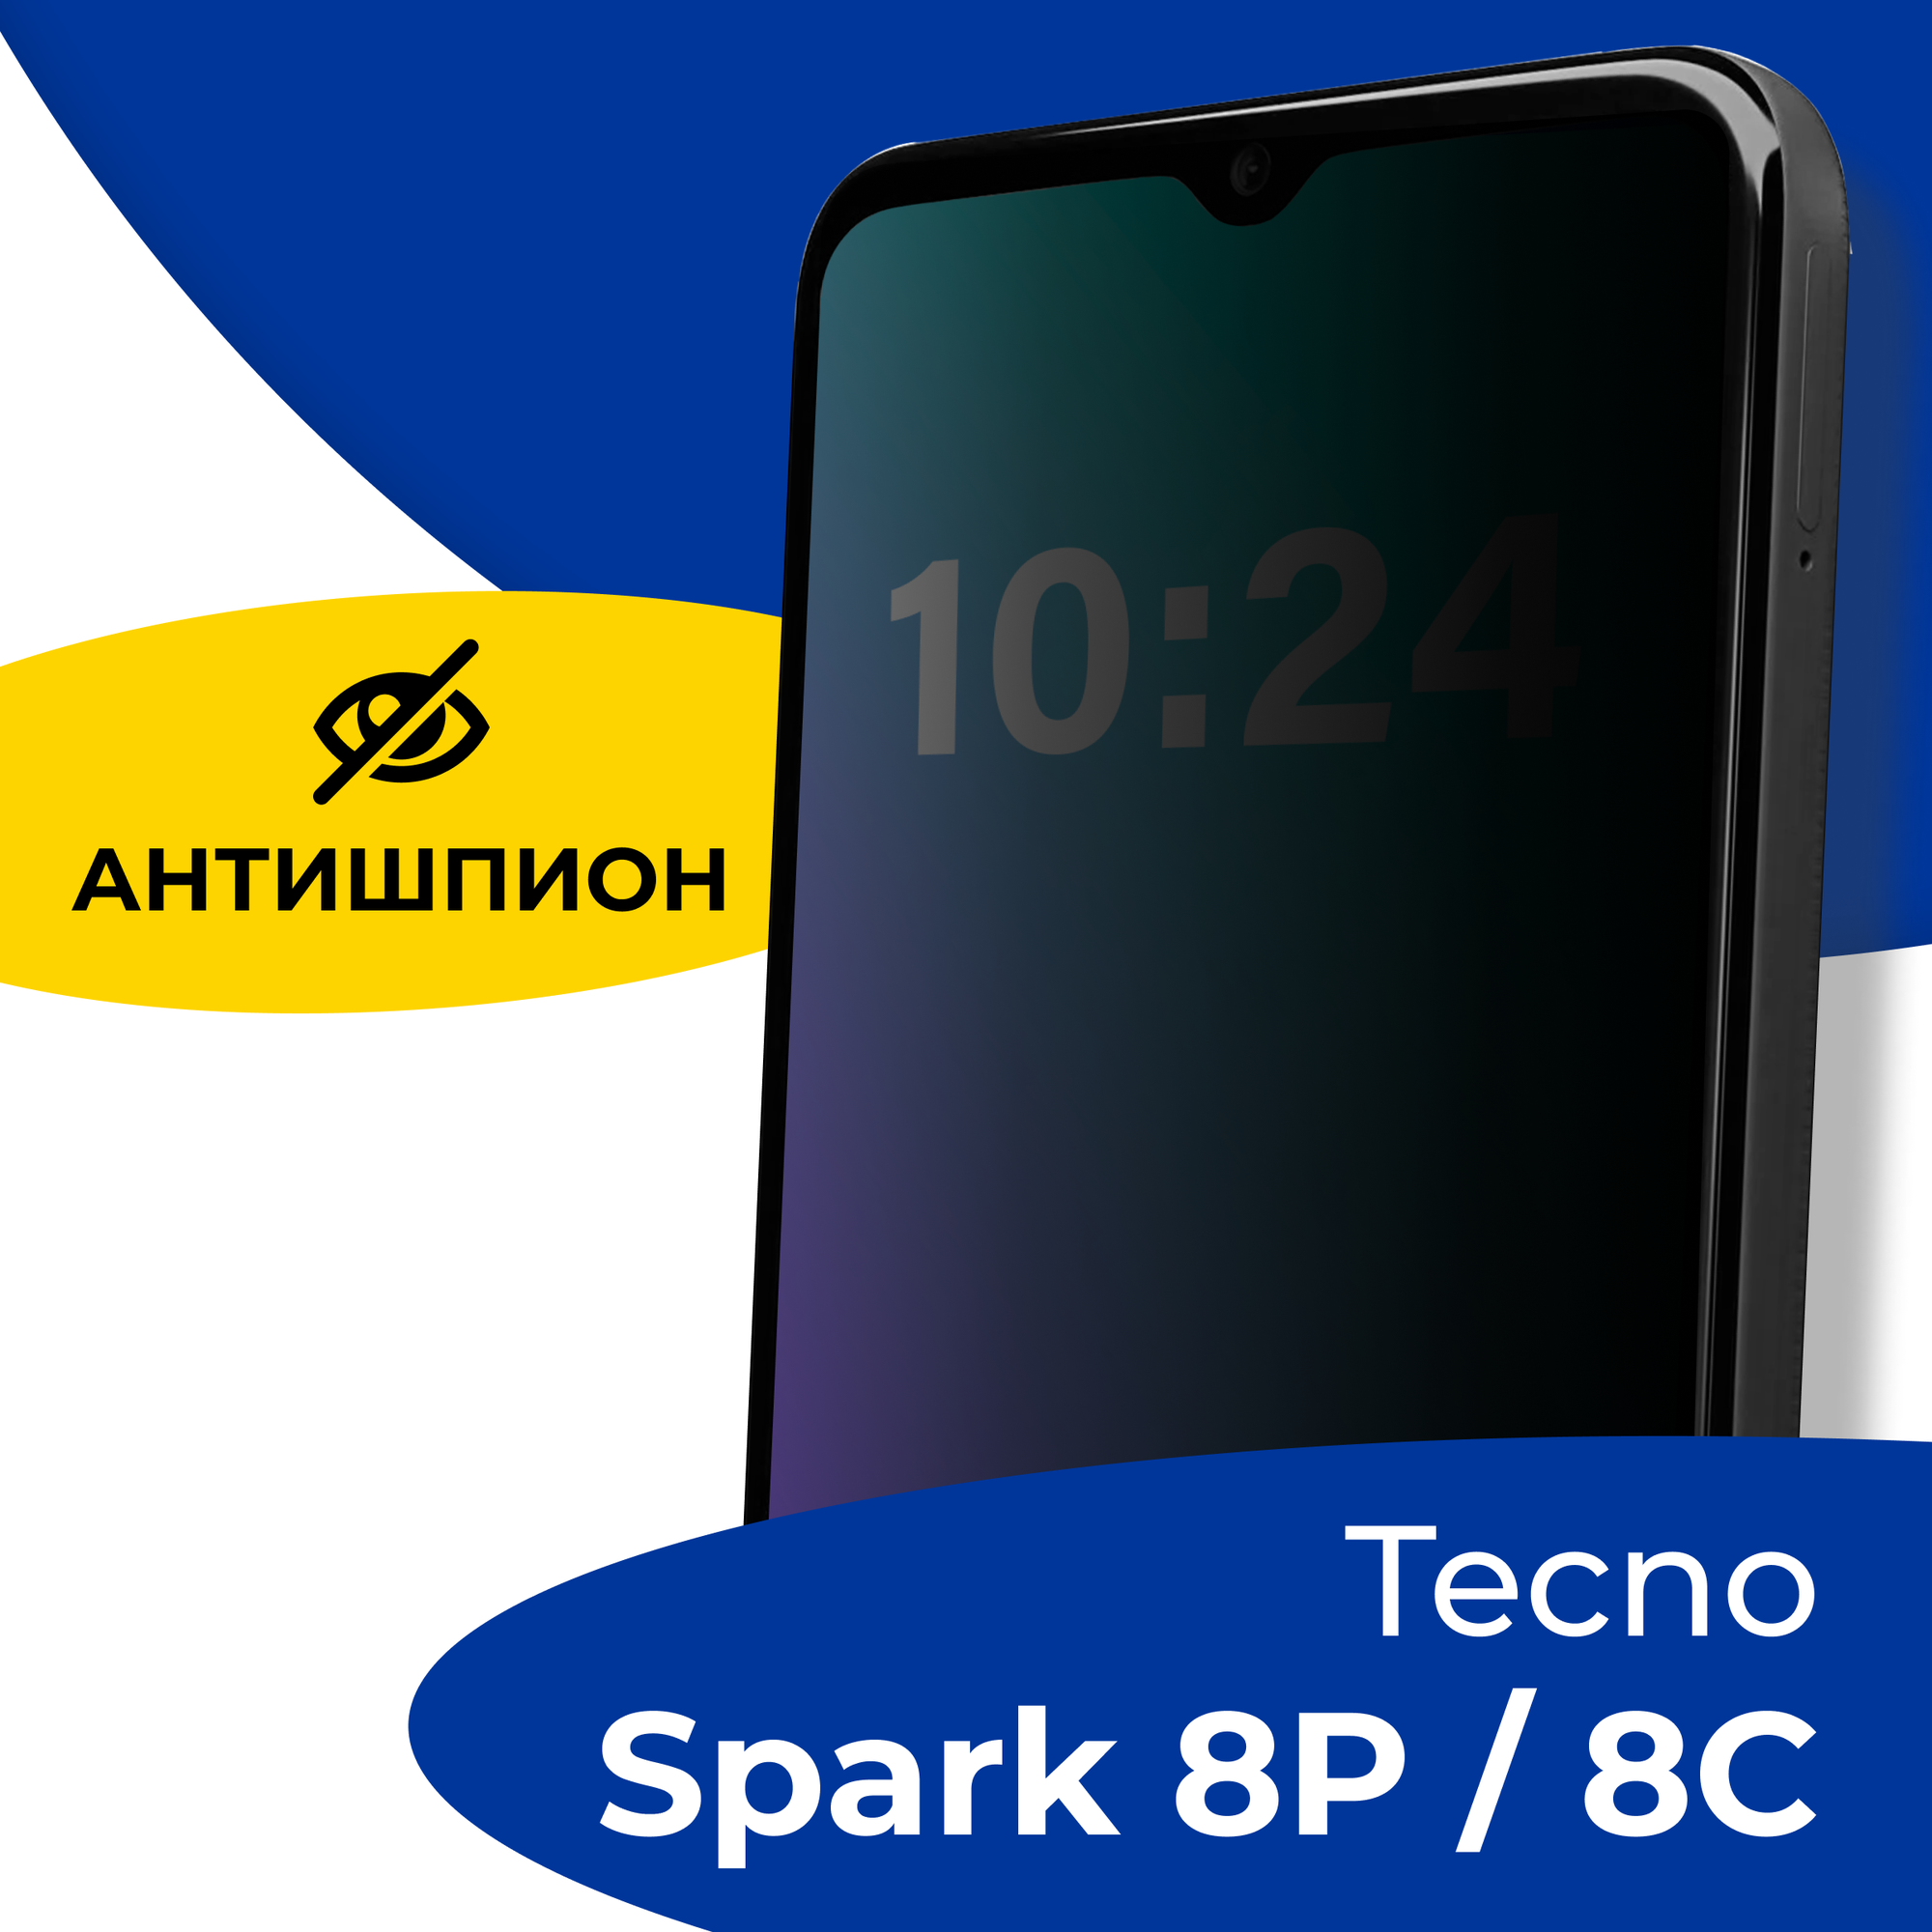 Защитное стекло Антишпион для телефона Tecno Spark 8P и 8C / Противоударное полноэкранное стекло 5D на смартфон Техно Спарк 8Р и 8С / Черное